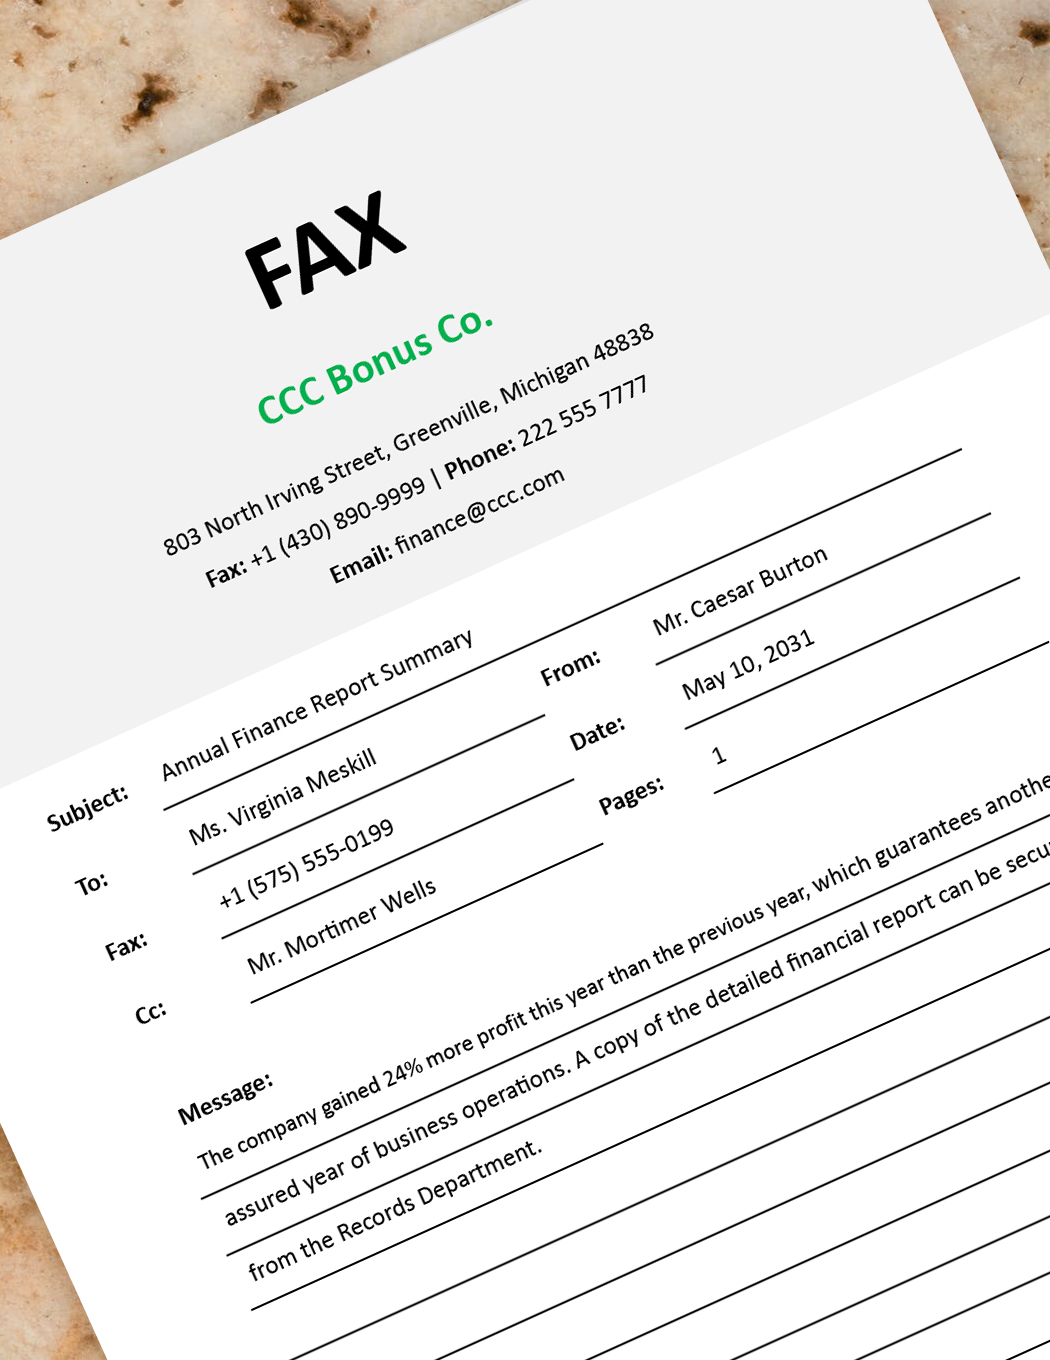 Finance Fax Cover Sheet Template